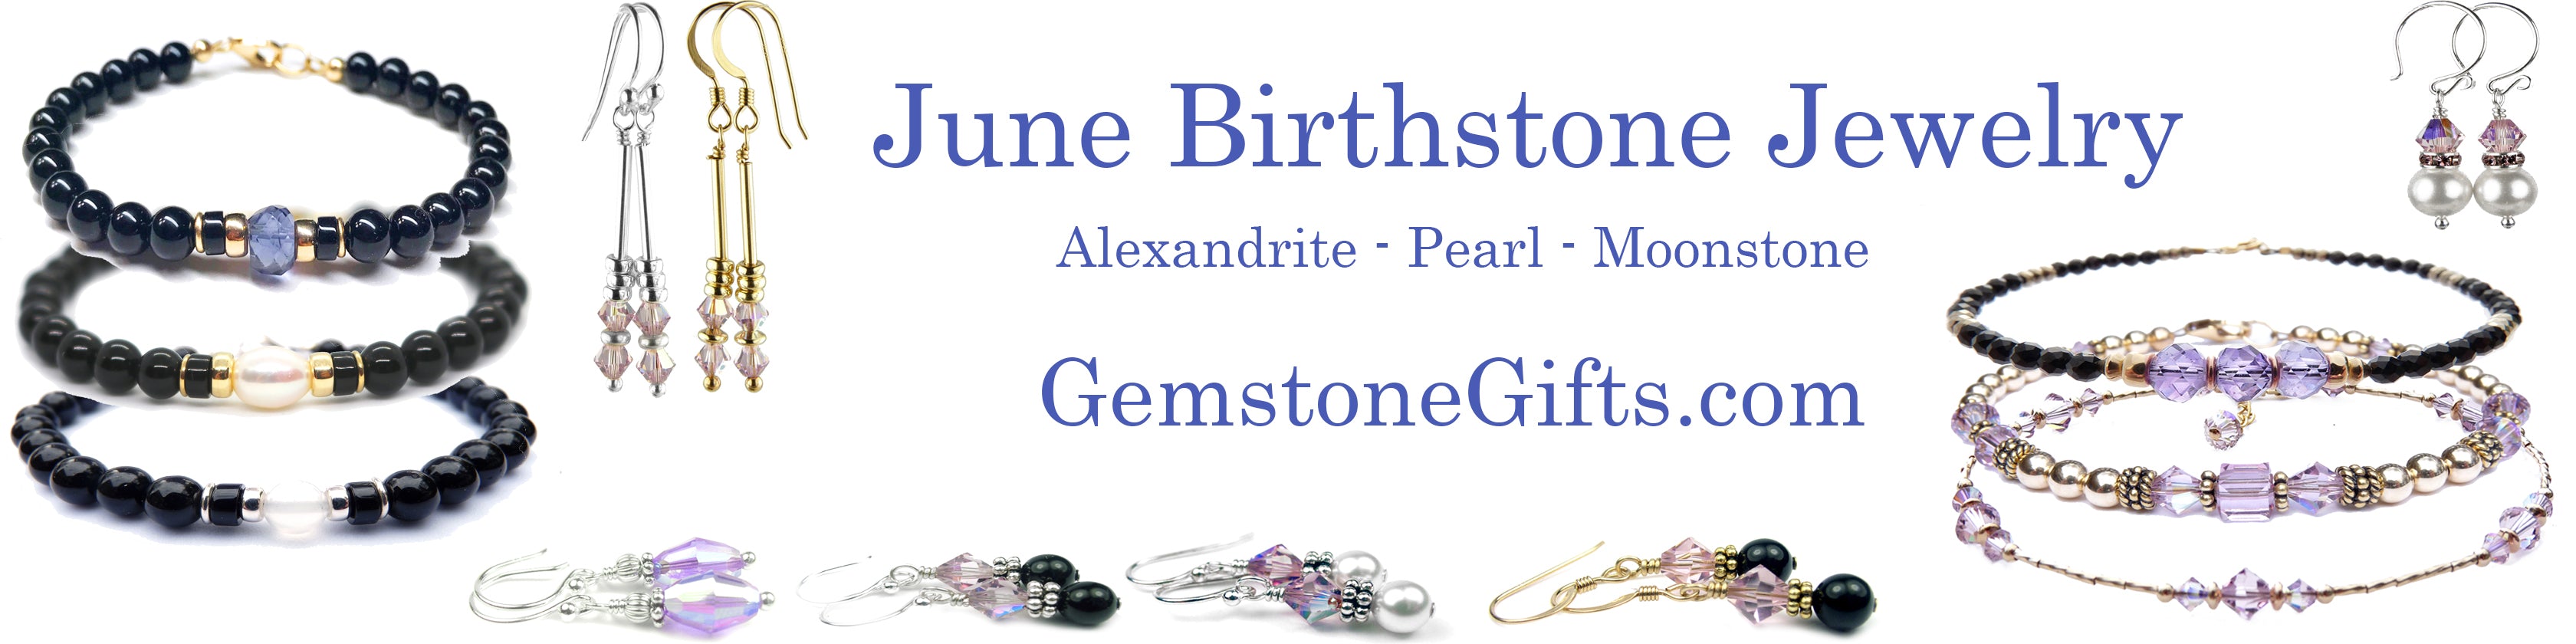 June Birthday Jewelry for Men and Women